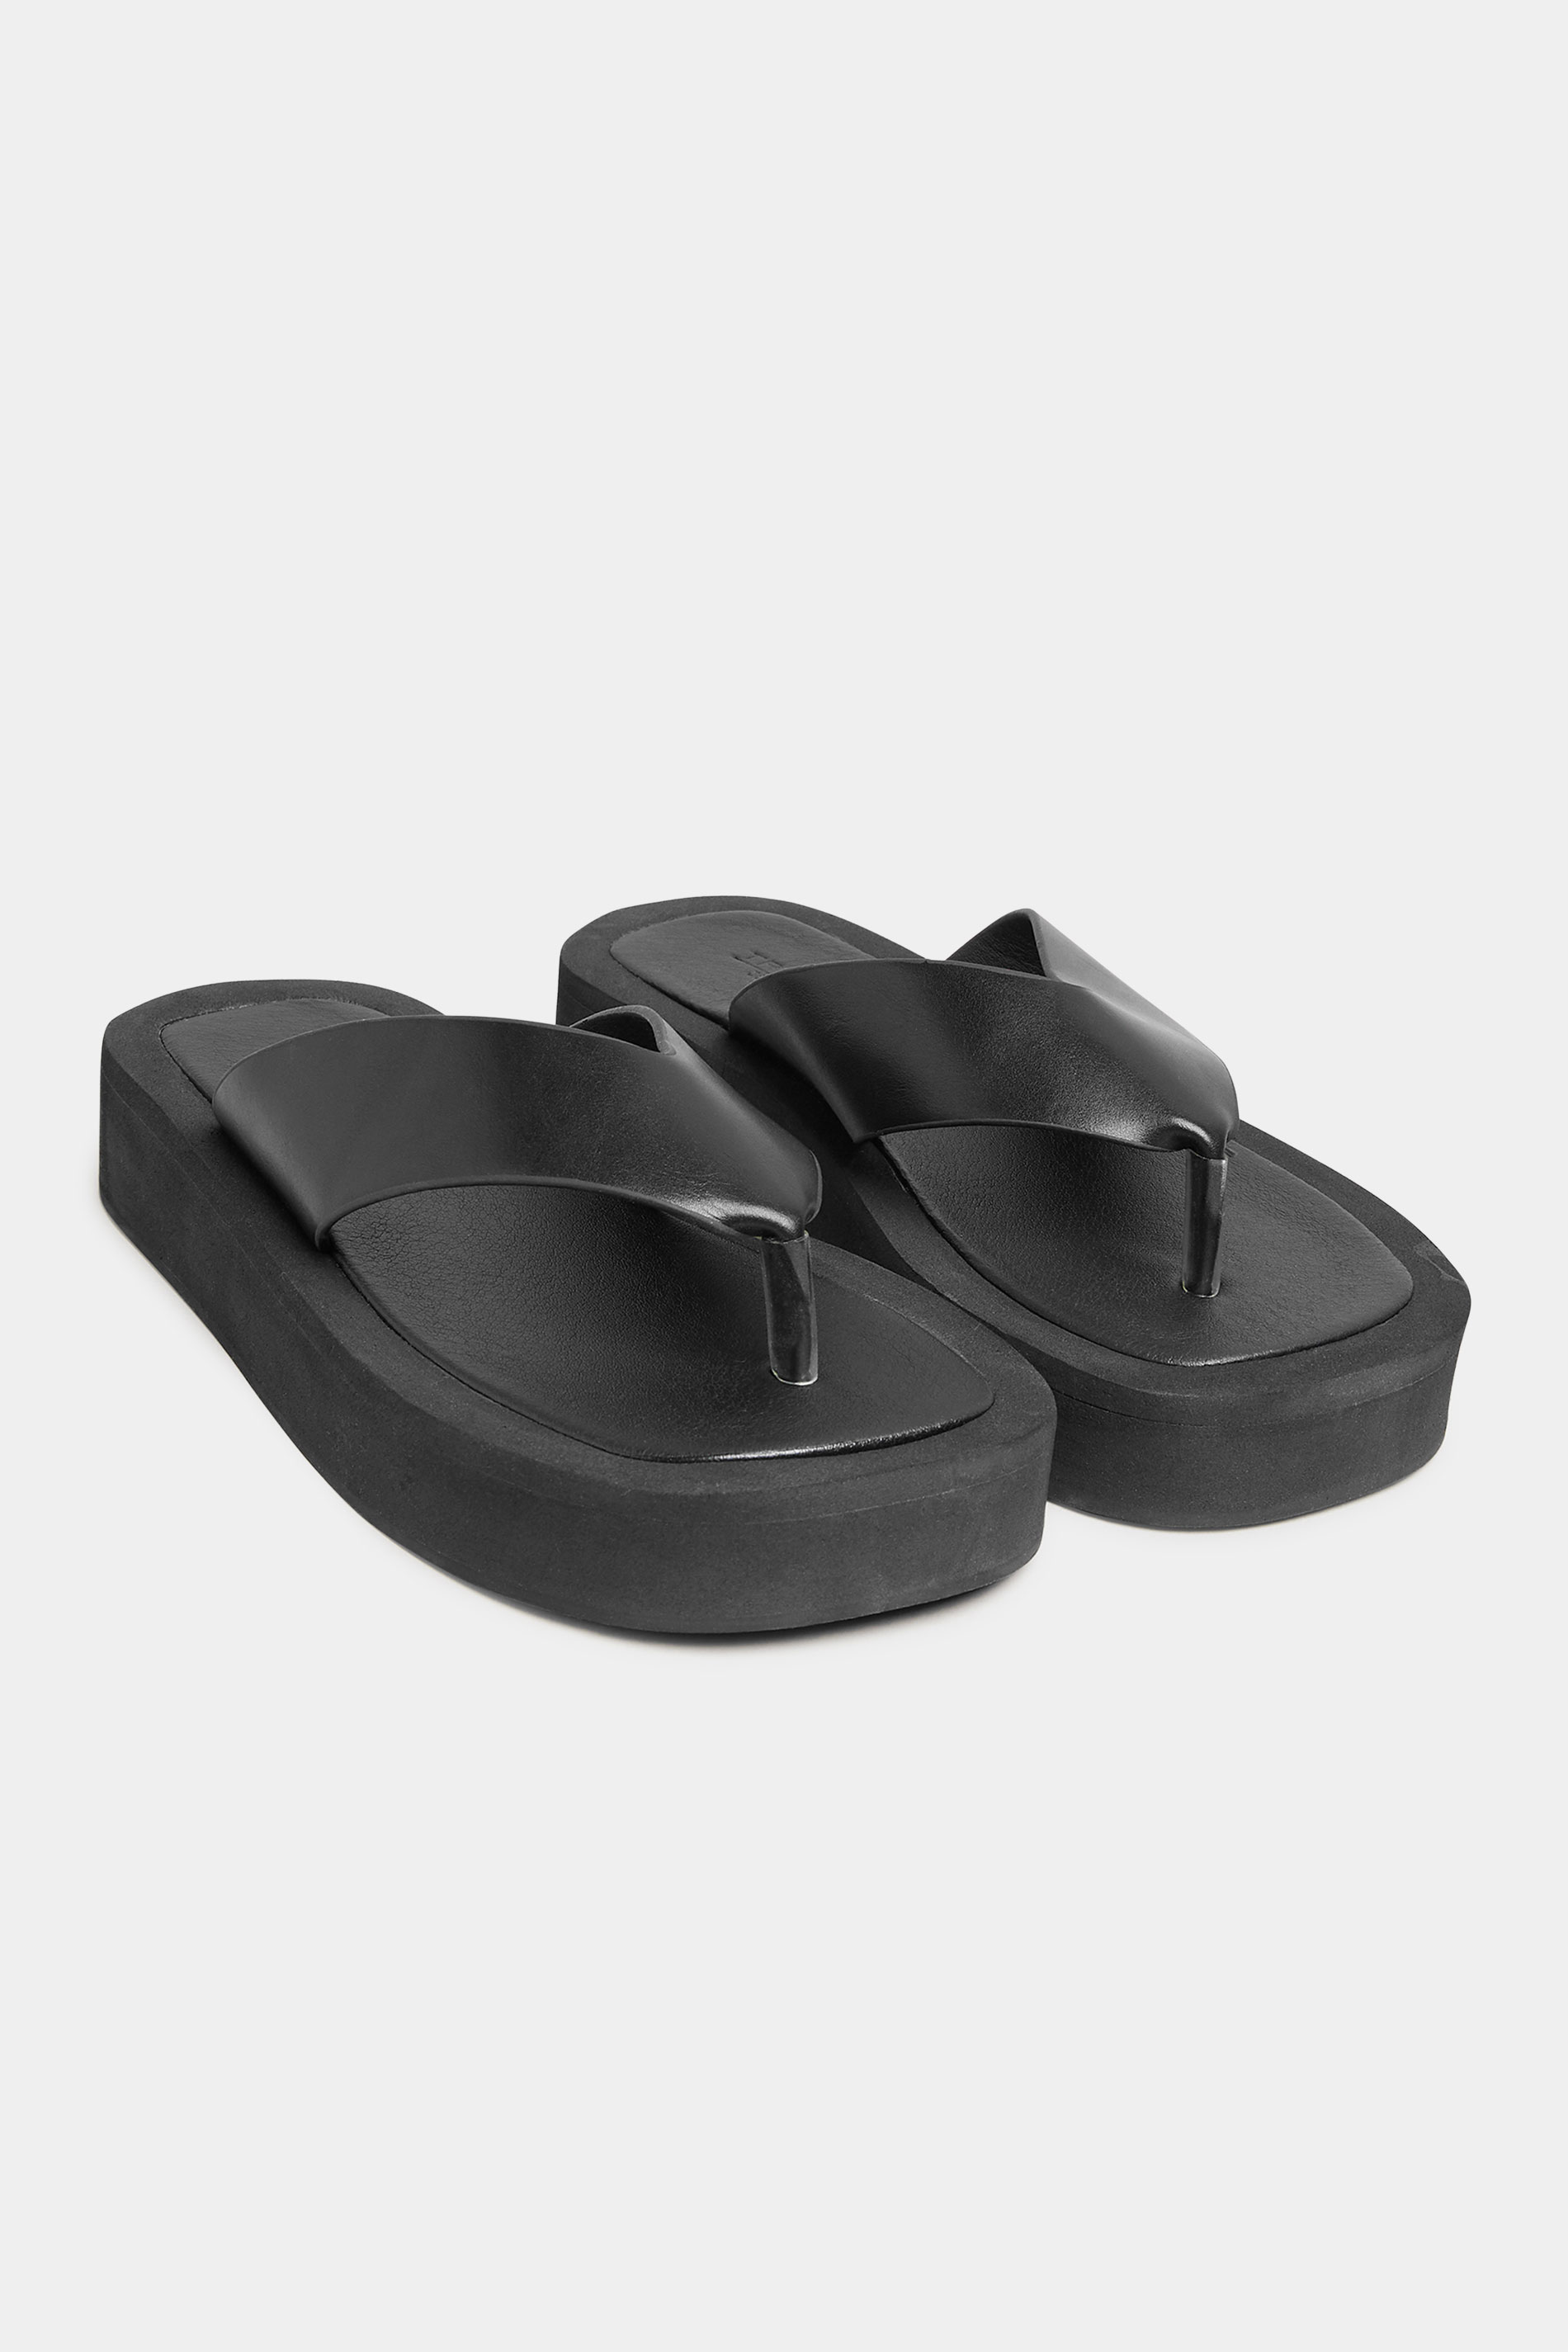 Grande taille  Shoes Grande taille  Sandals | PixieGirl Black Flatform Sandals In Standard D Fit - LA75226